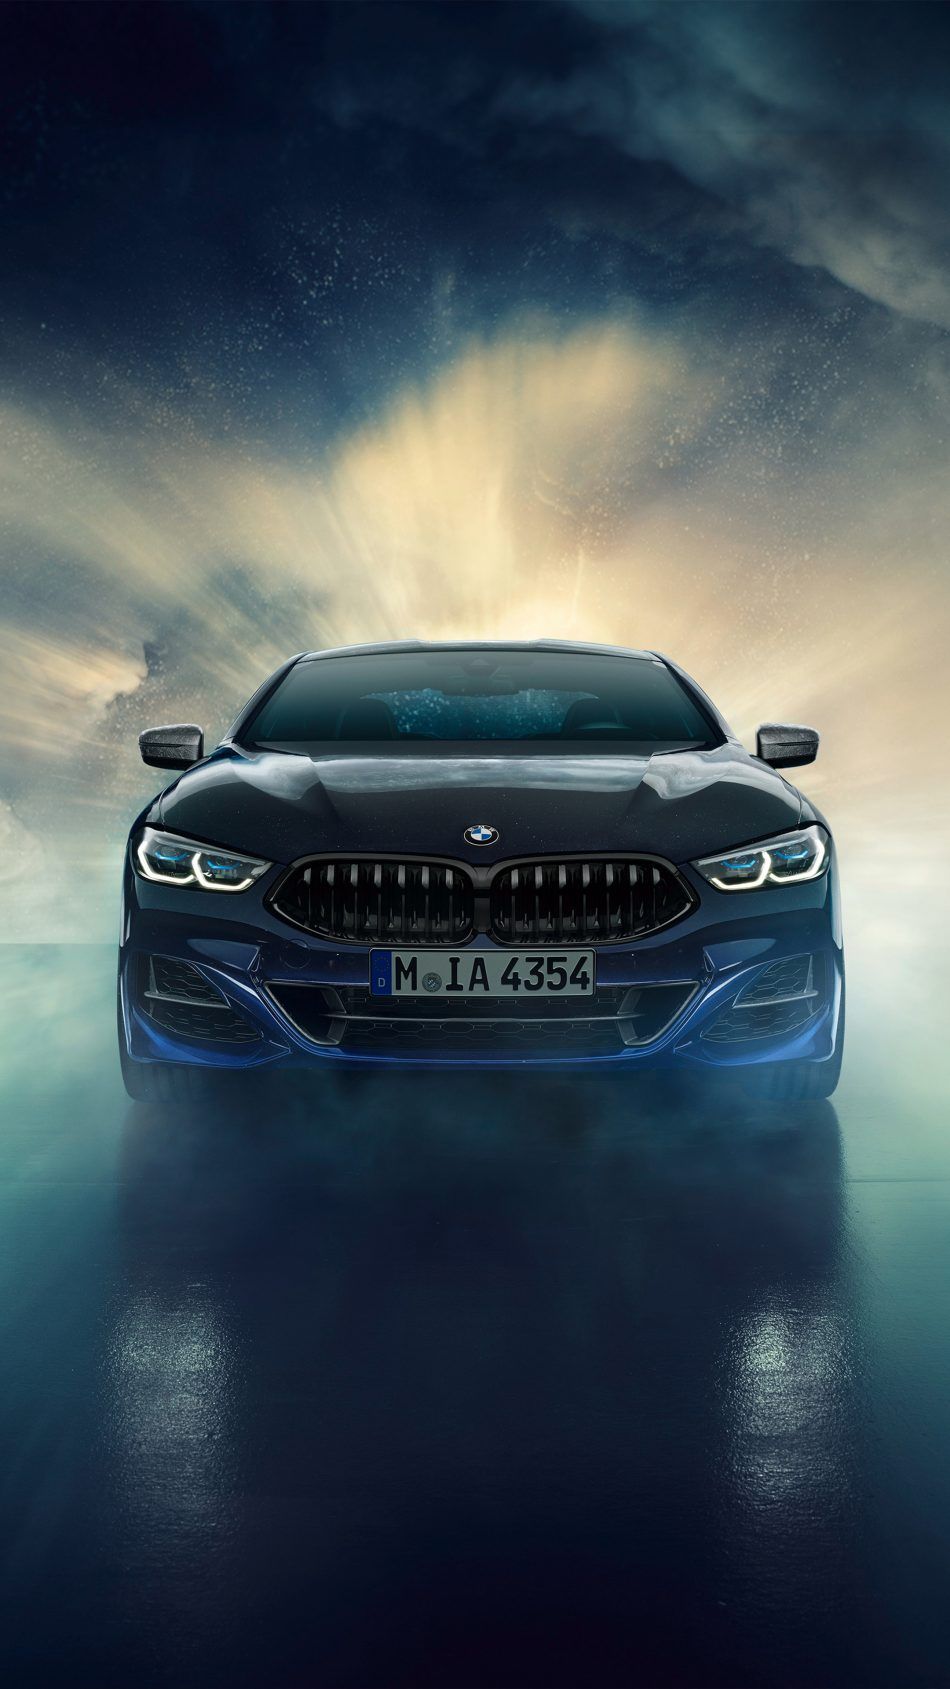 BMW Individual M850i Xdrive Night Sky 4K Ultra HD Mobile Wallpaper. Bmw, Car in the world, Bmw wallpaper